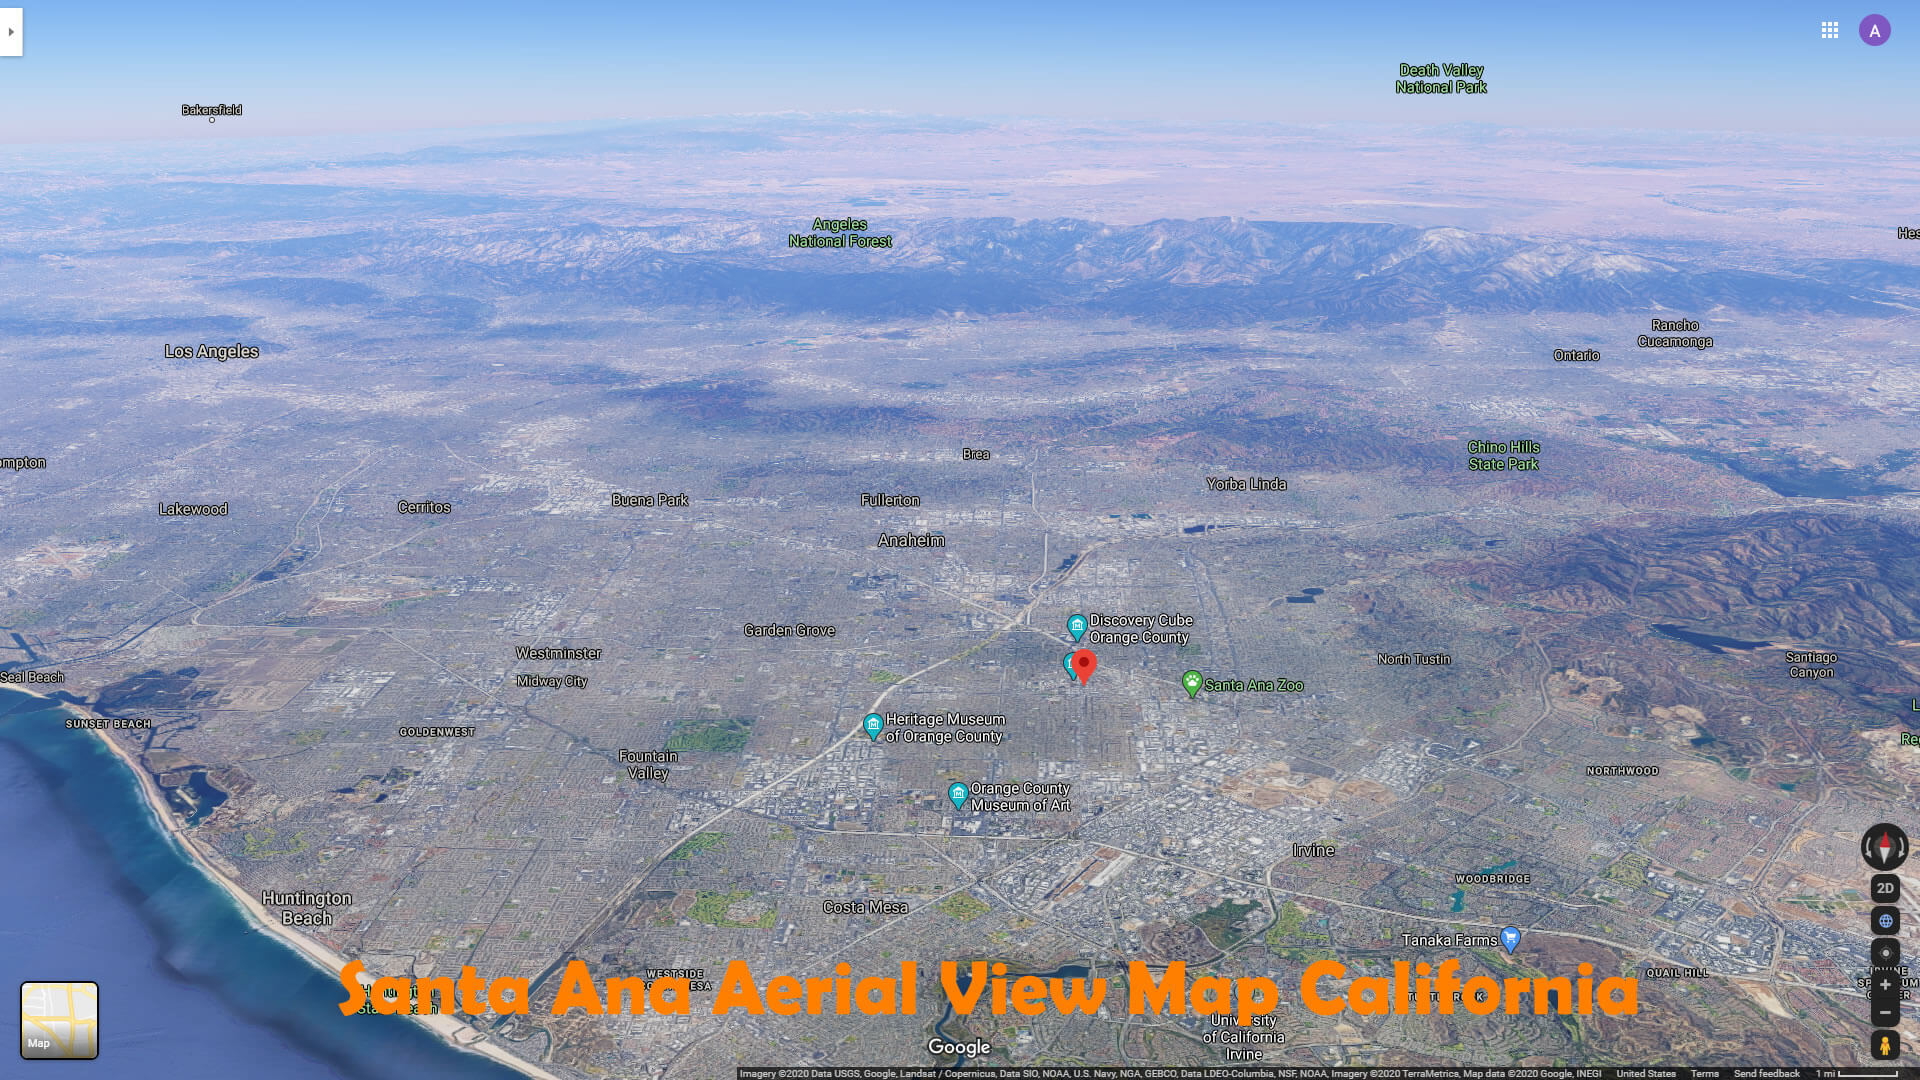 Santa Ana Aerial View Map California